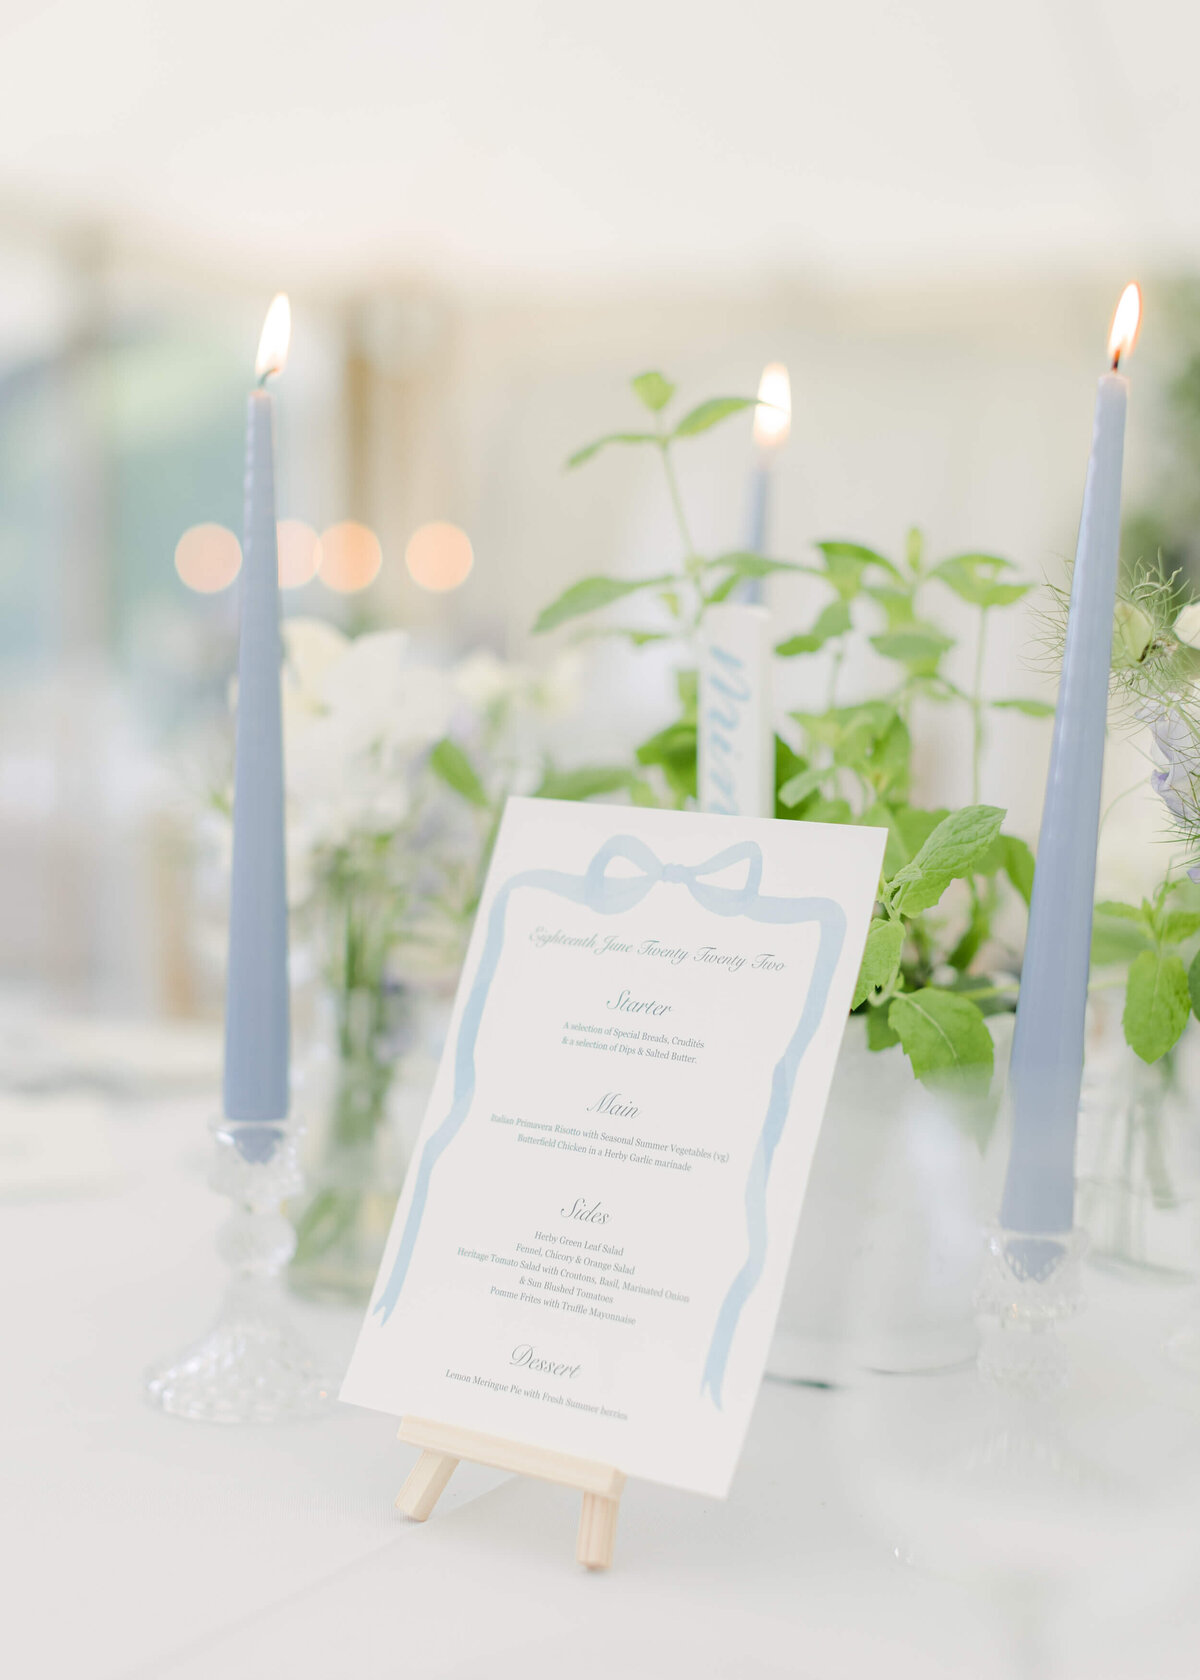 chloe-winstanley-weddings-wiltshire-hatch-house-menu-blue-candlesticks